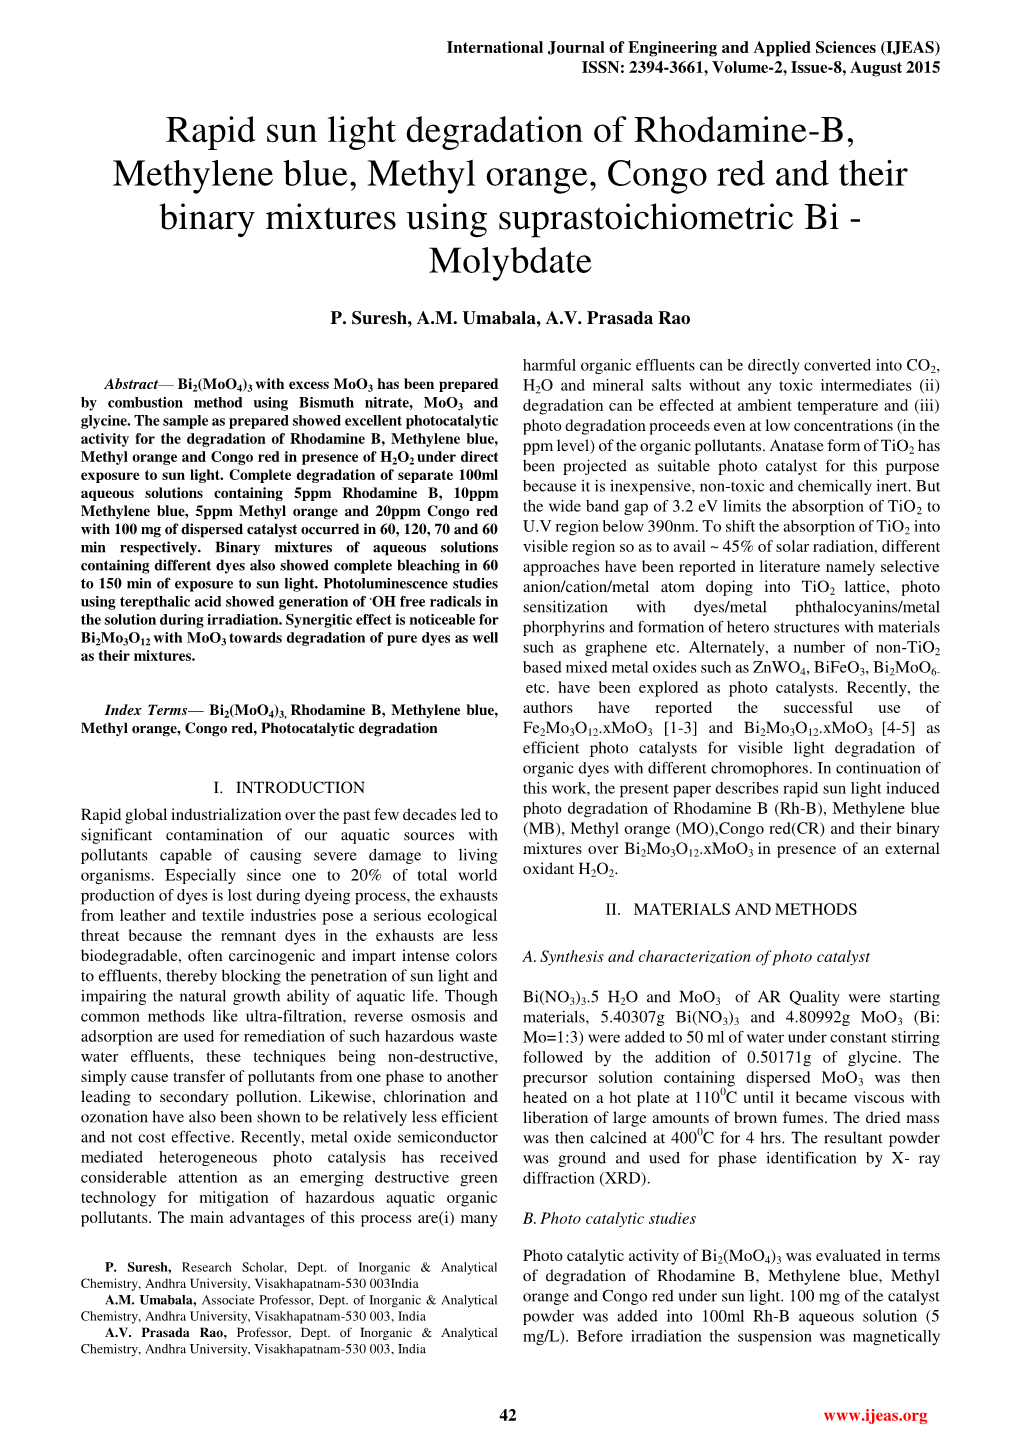 Rapid Sun Light Degradation of Rhodamine-B, Methylene Blue, Methyl Orange, Congo Red and Their Binary Mixtures Using Suprastoichiometric Bi - Molybdate